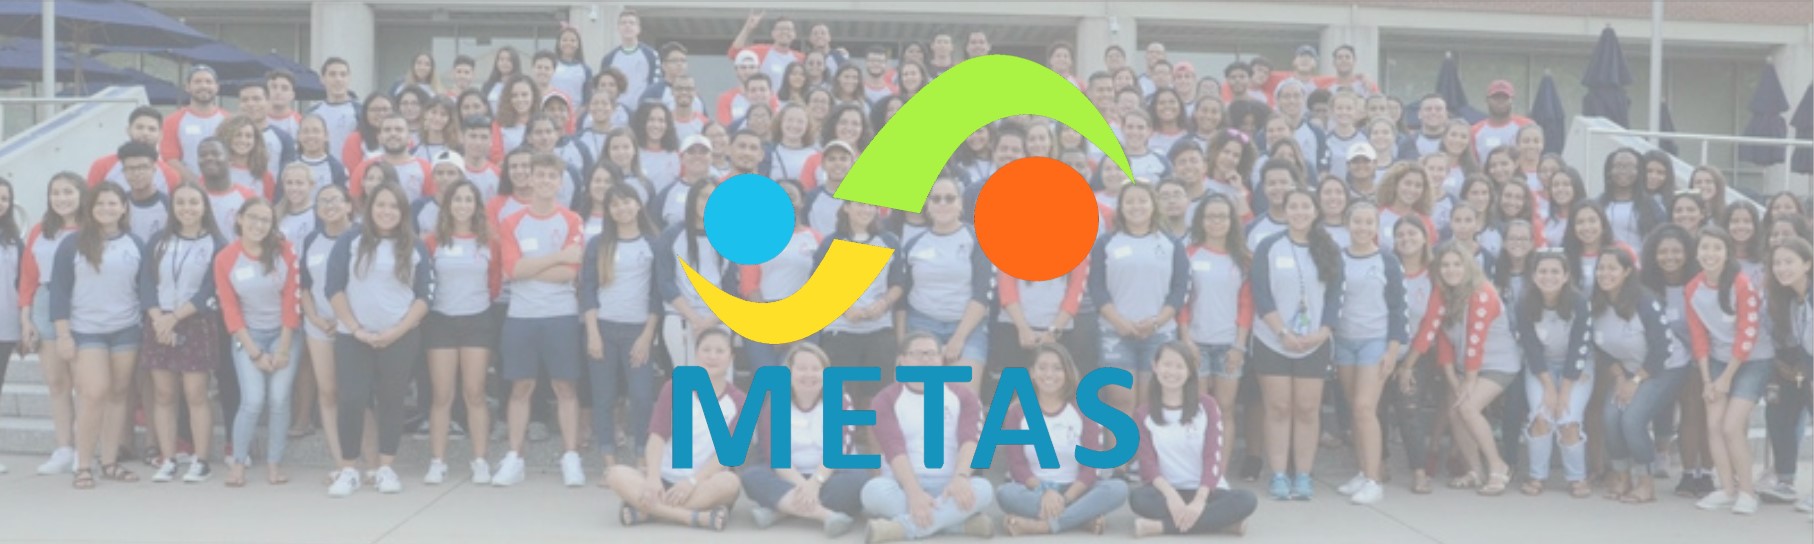 Metas Group photo with logo overlay